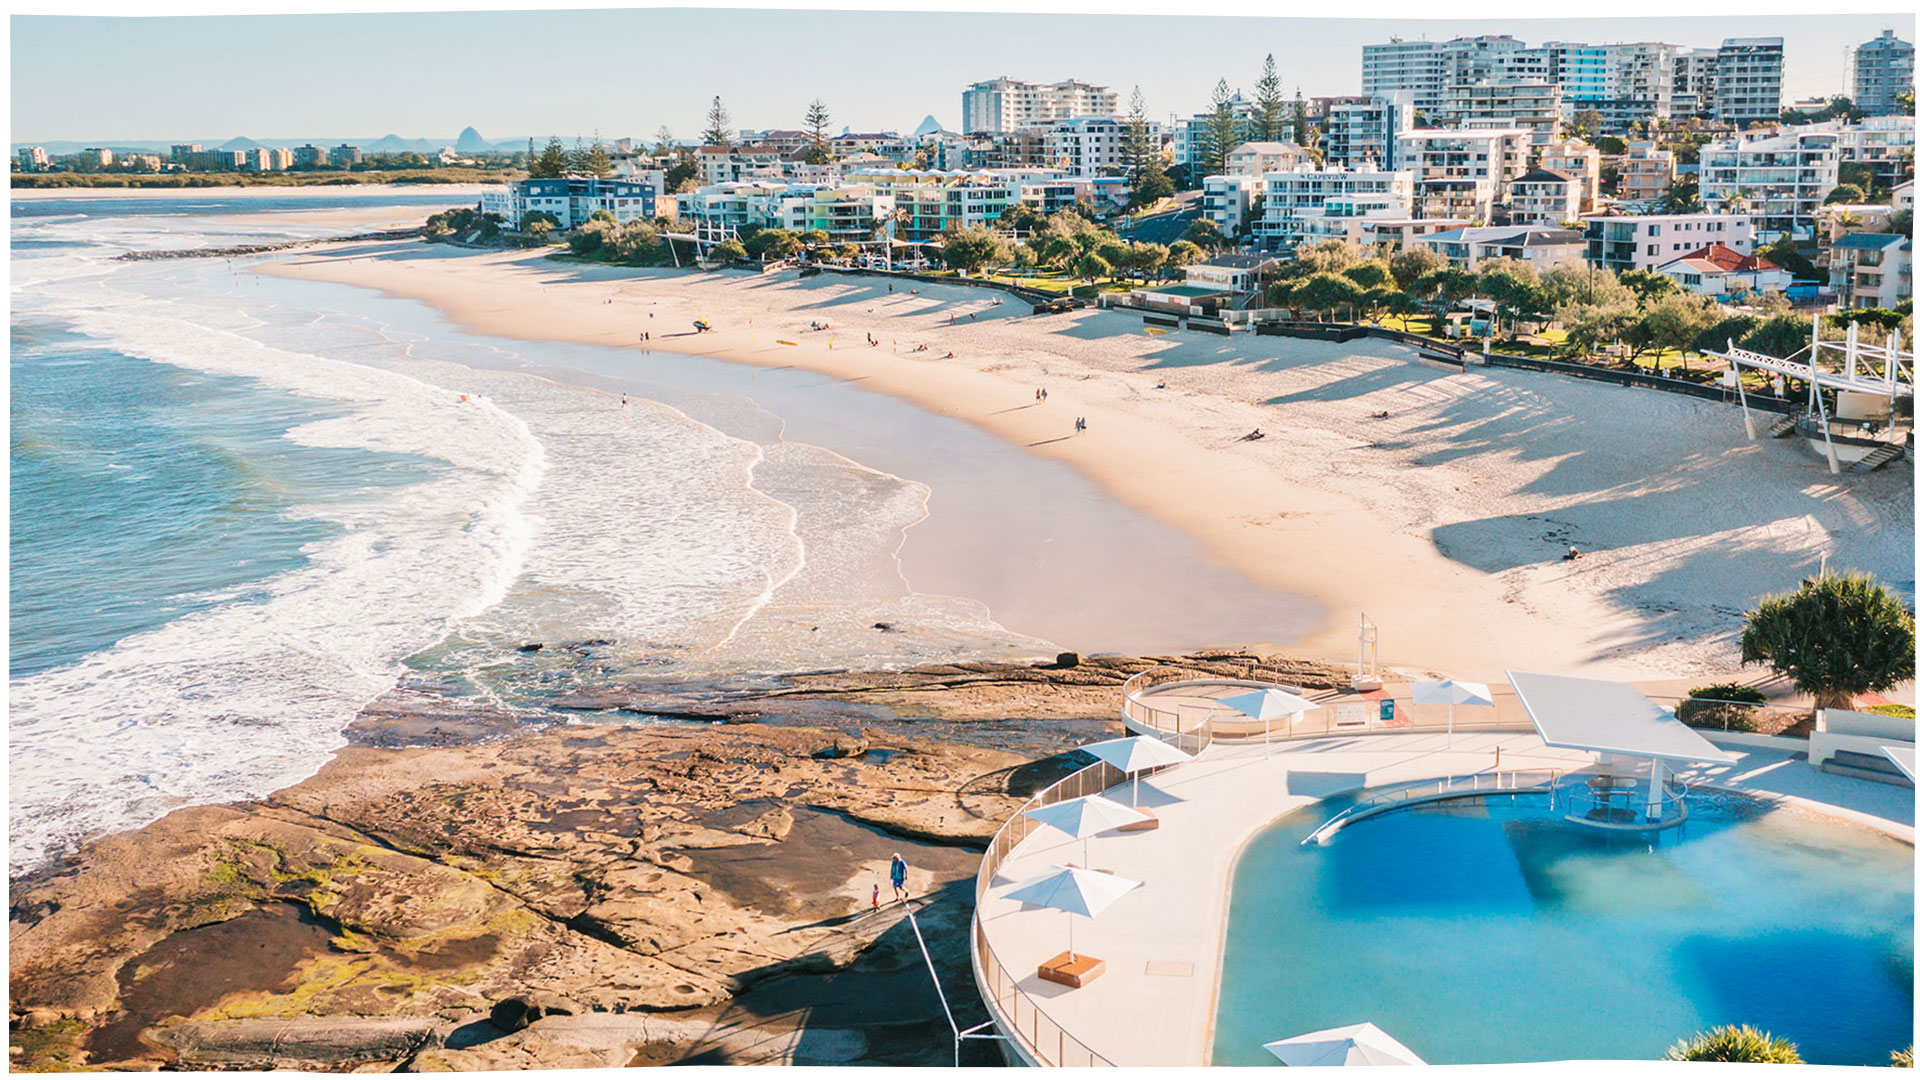 The Top 11 Beaches To Visit On The Sunshine Coast Tourism Sunshine Coast